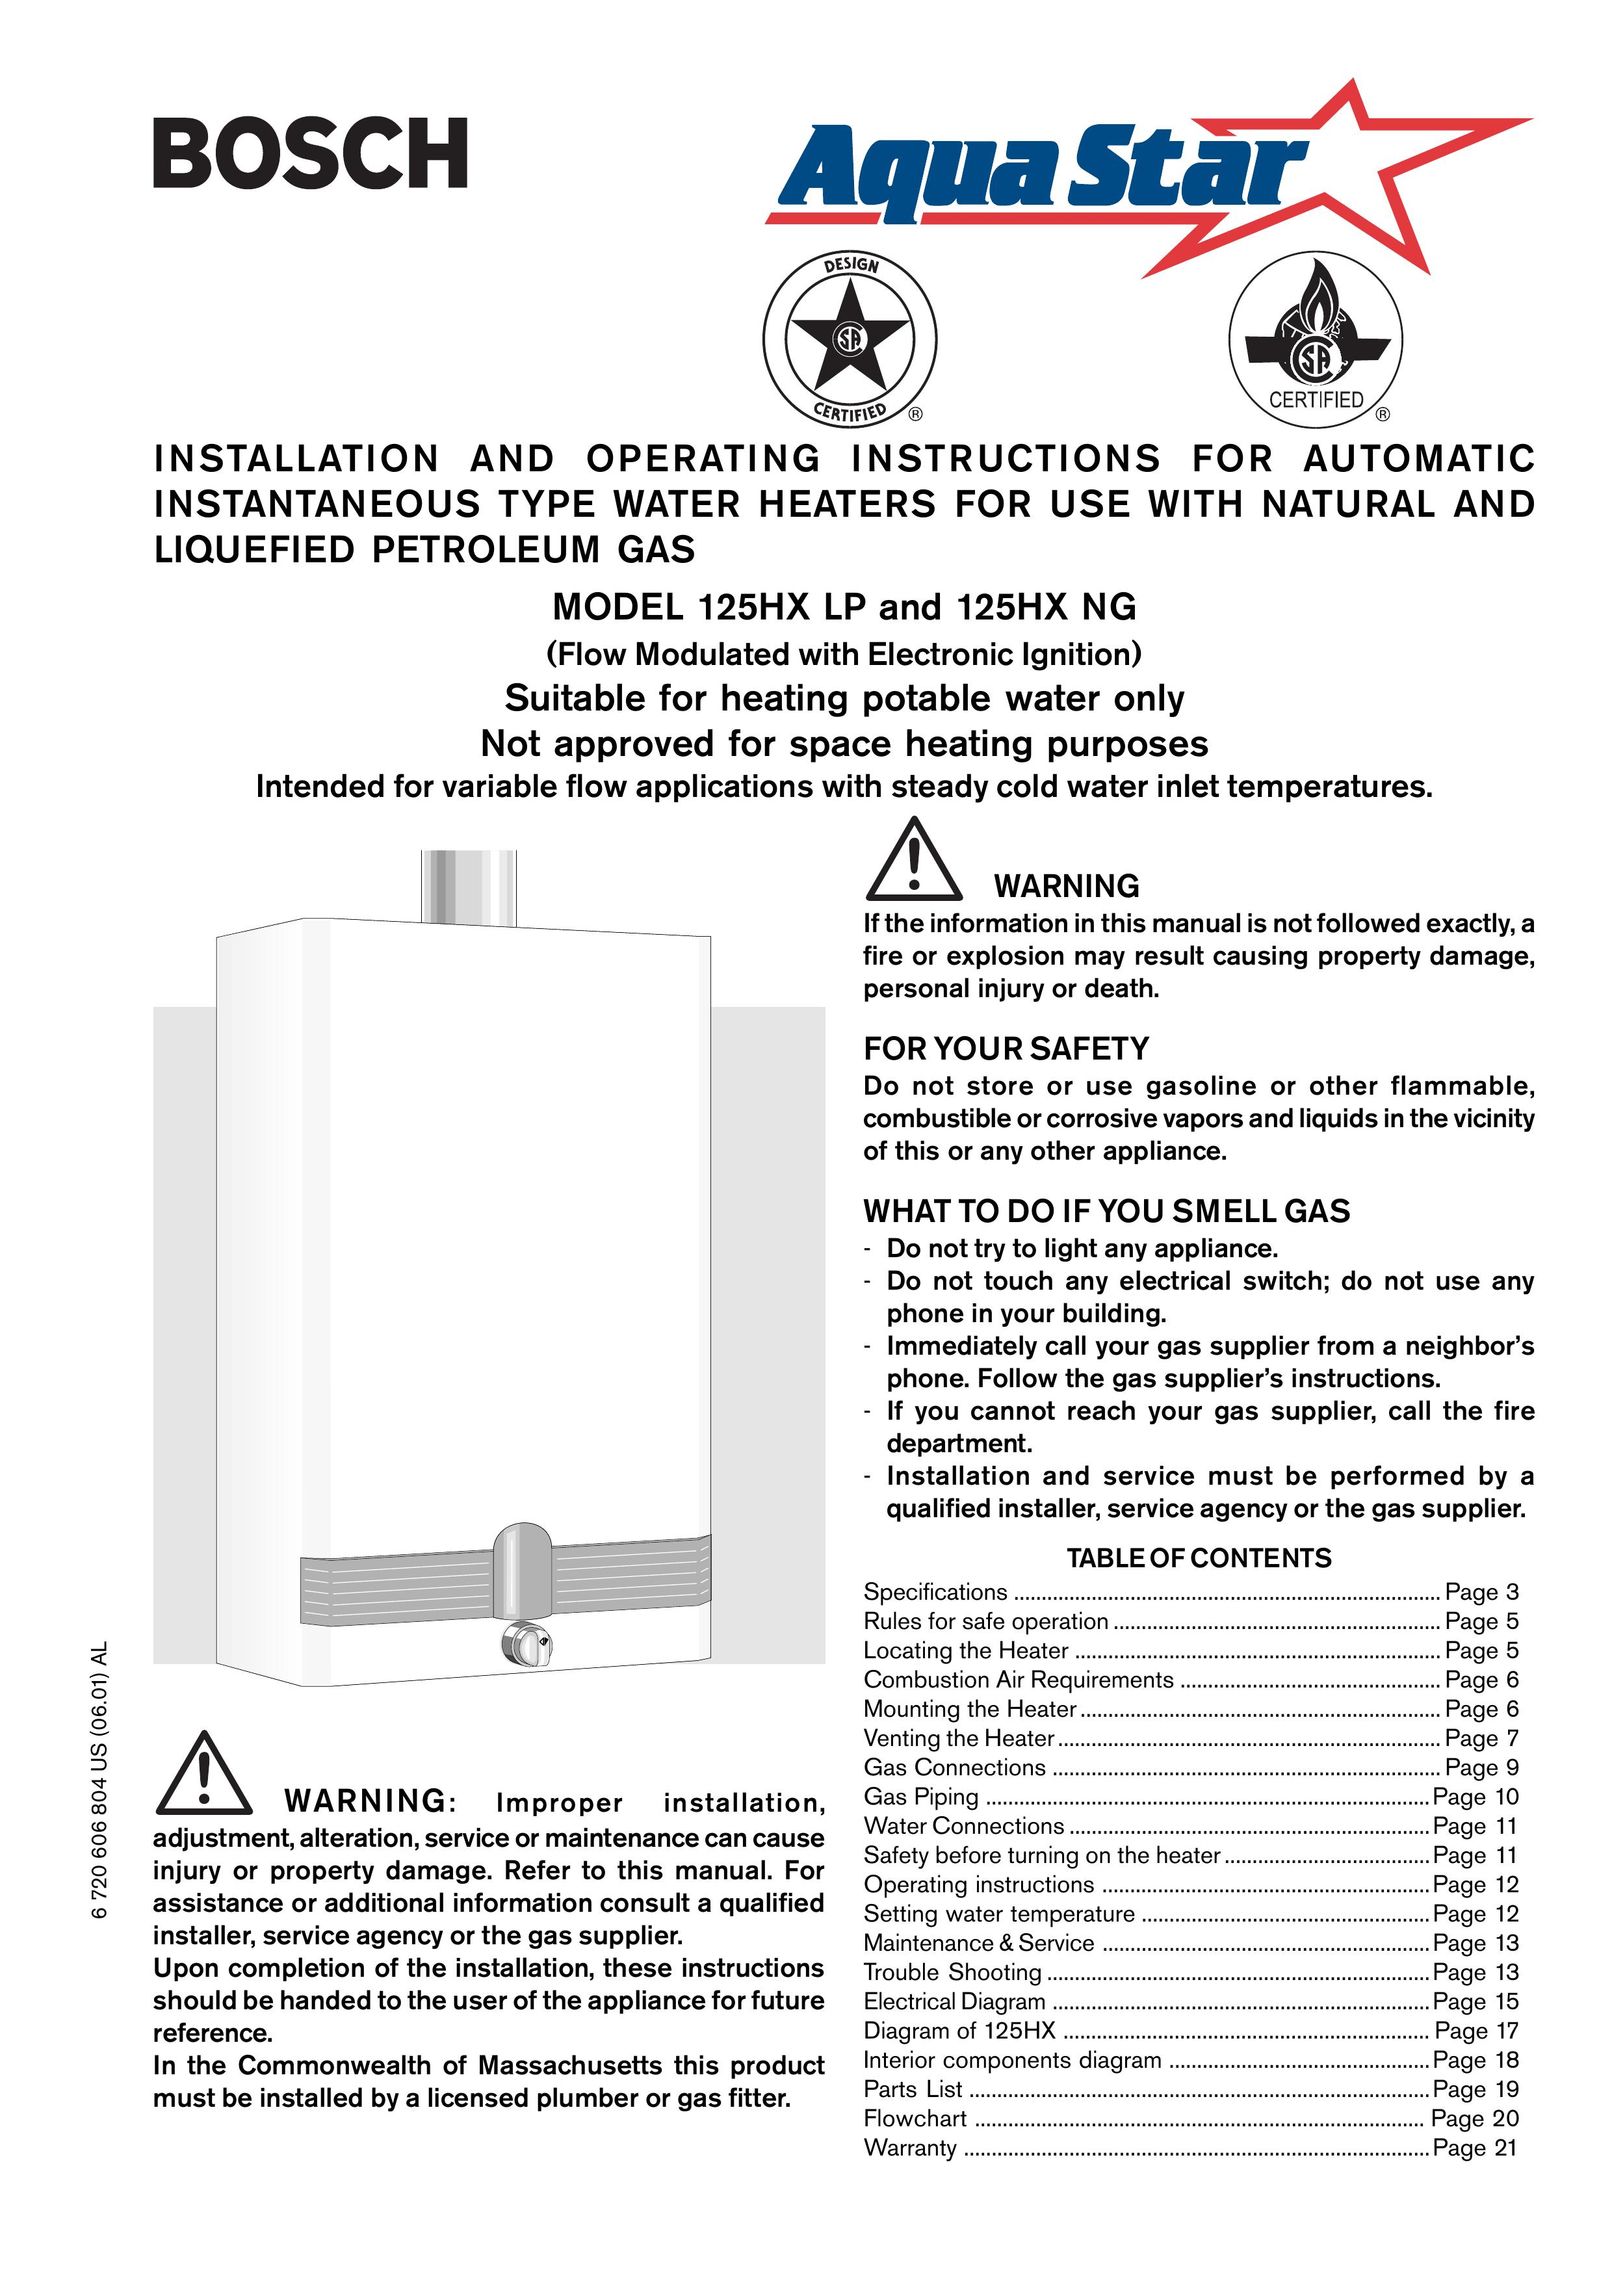 AquaStar 125HX NG Water Heater User Manual